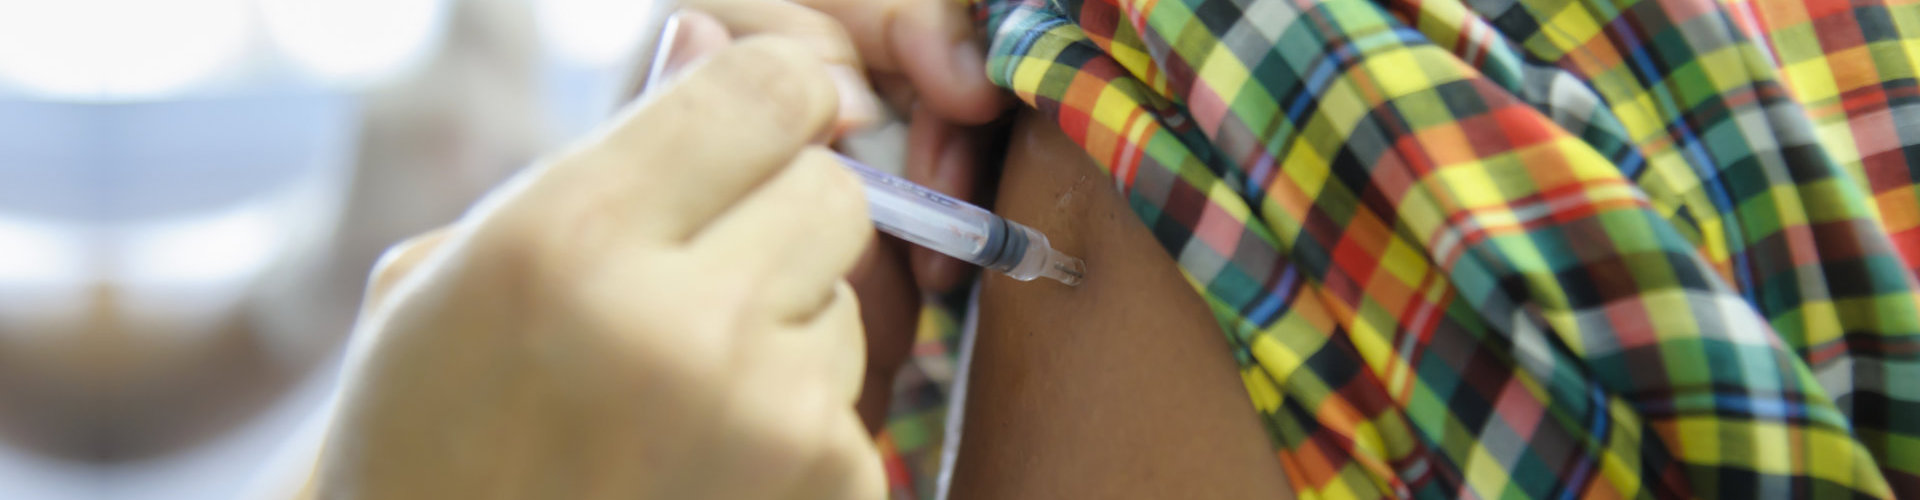 immunization vaccine injection